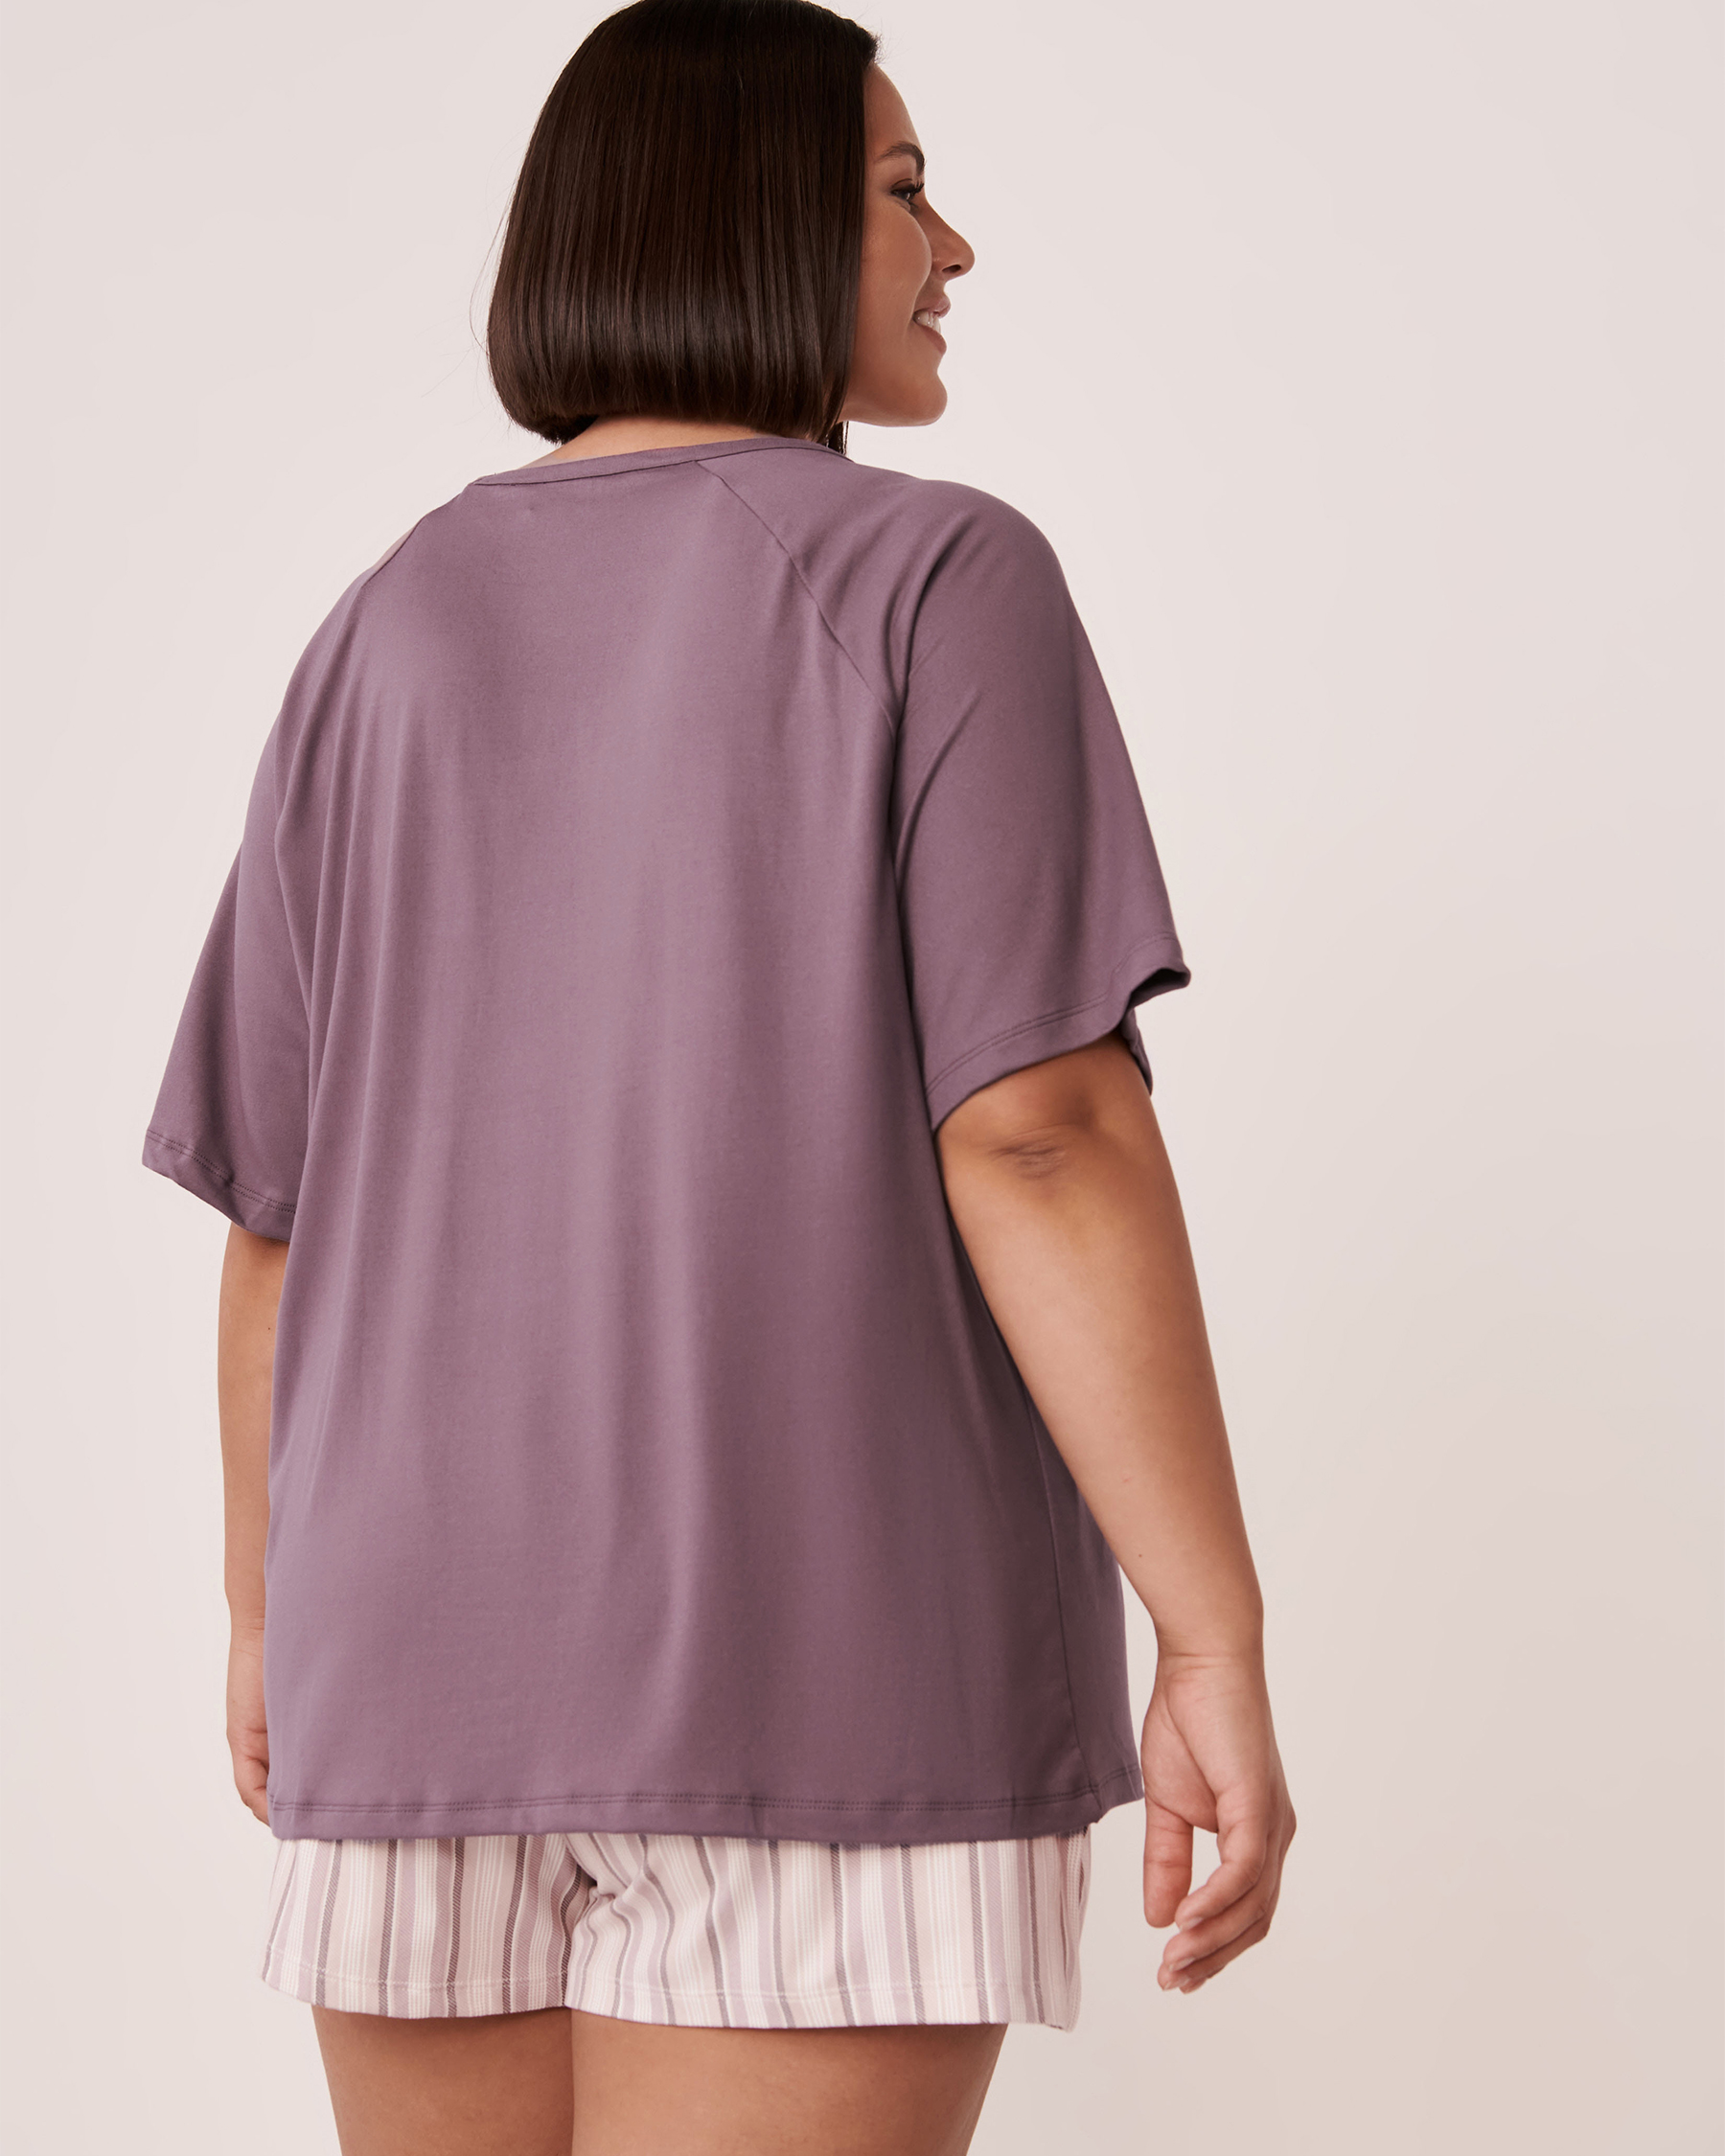 LA VIE EN ROSE Super Soft Raglan Sleeve Shirt Dark plum 40100326 - View6